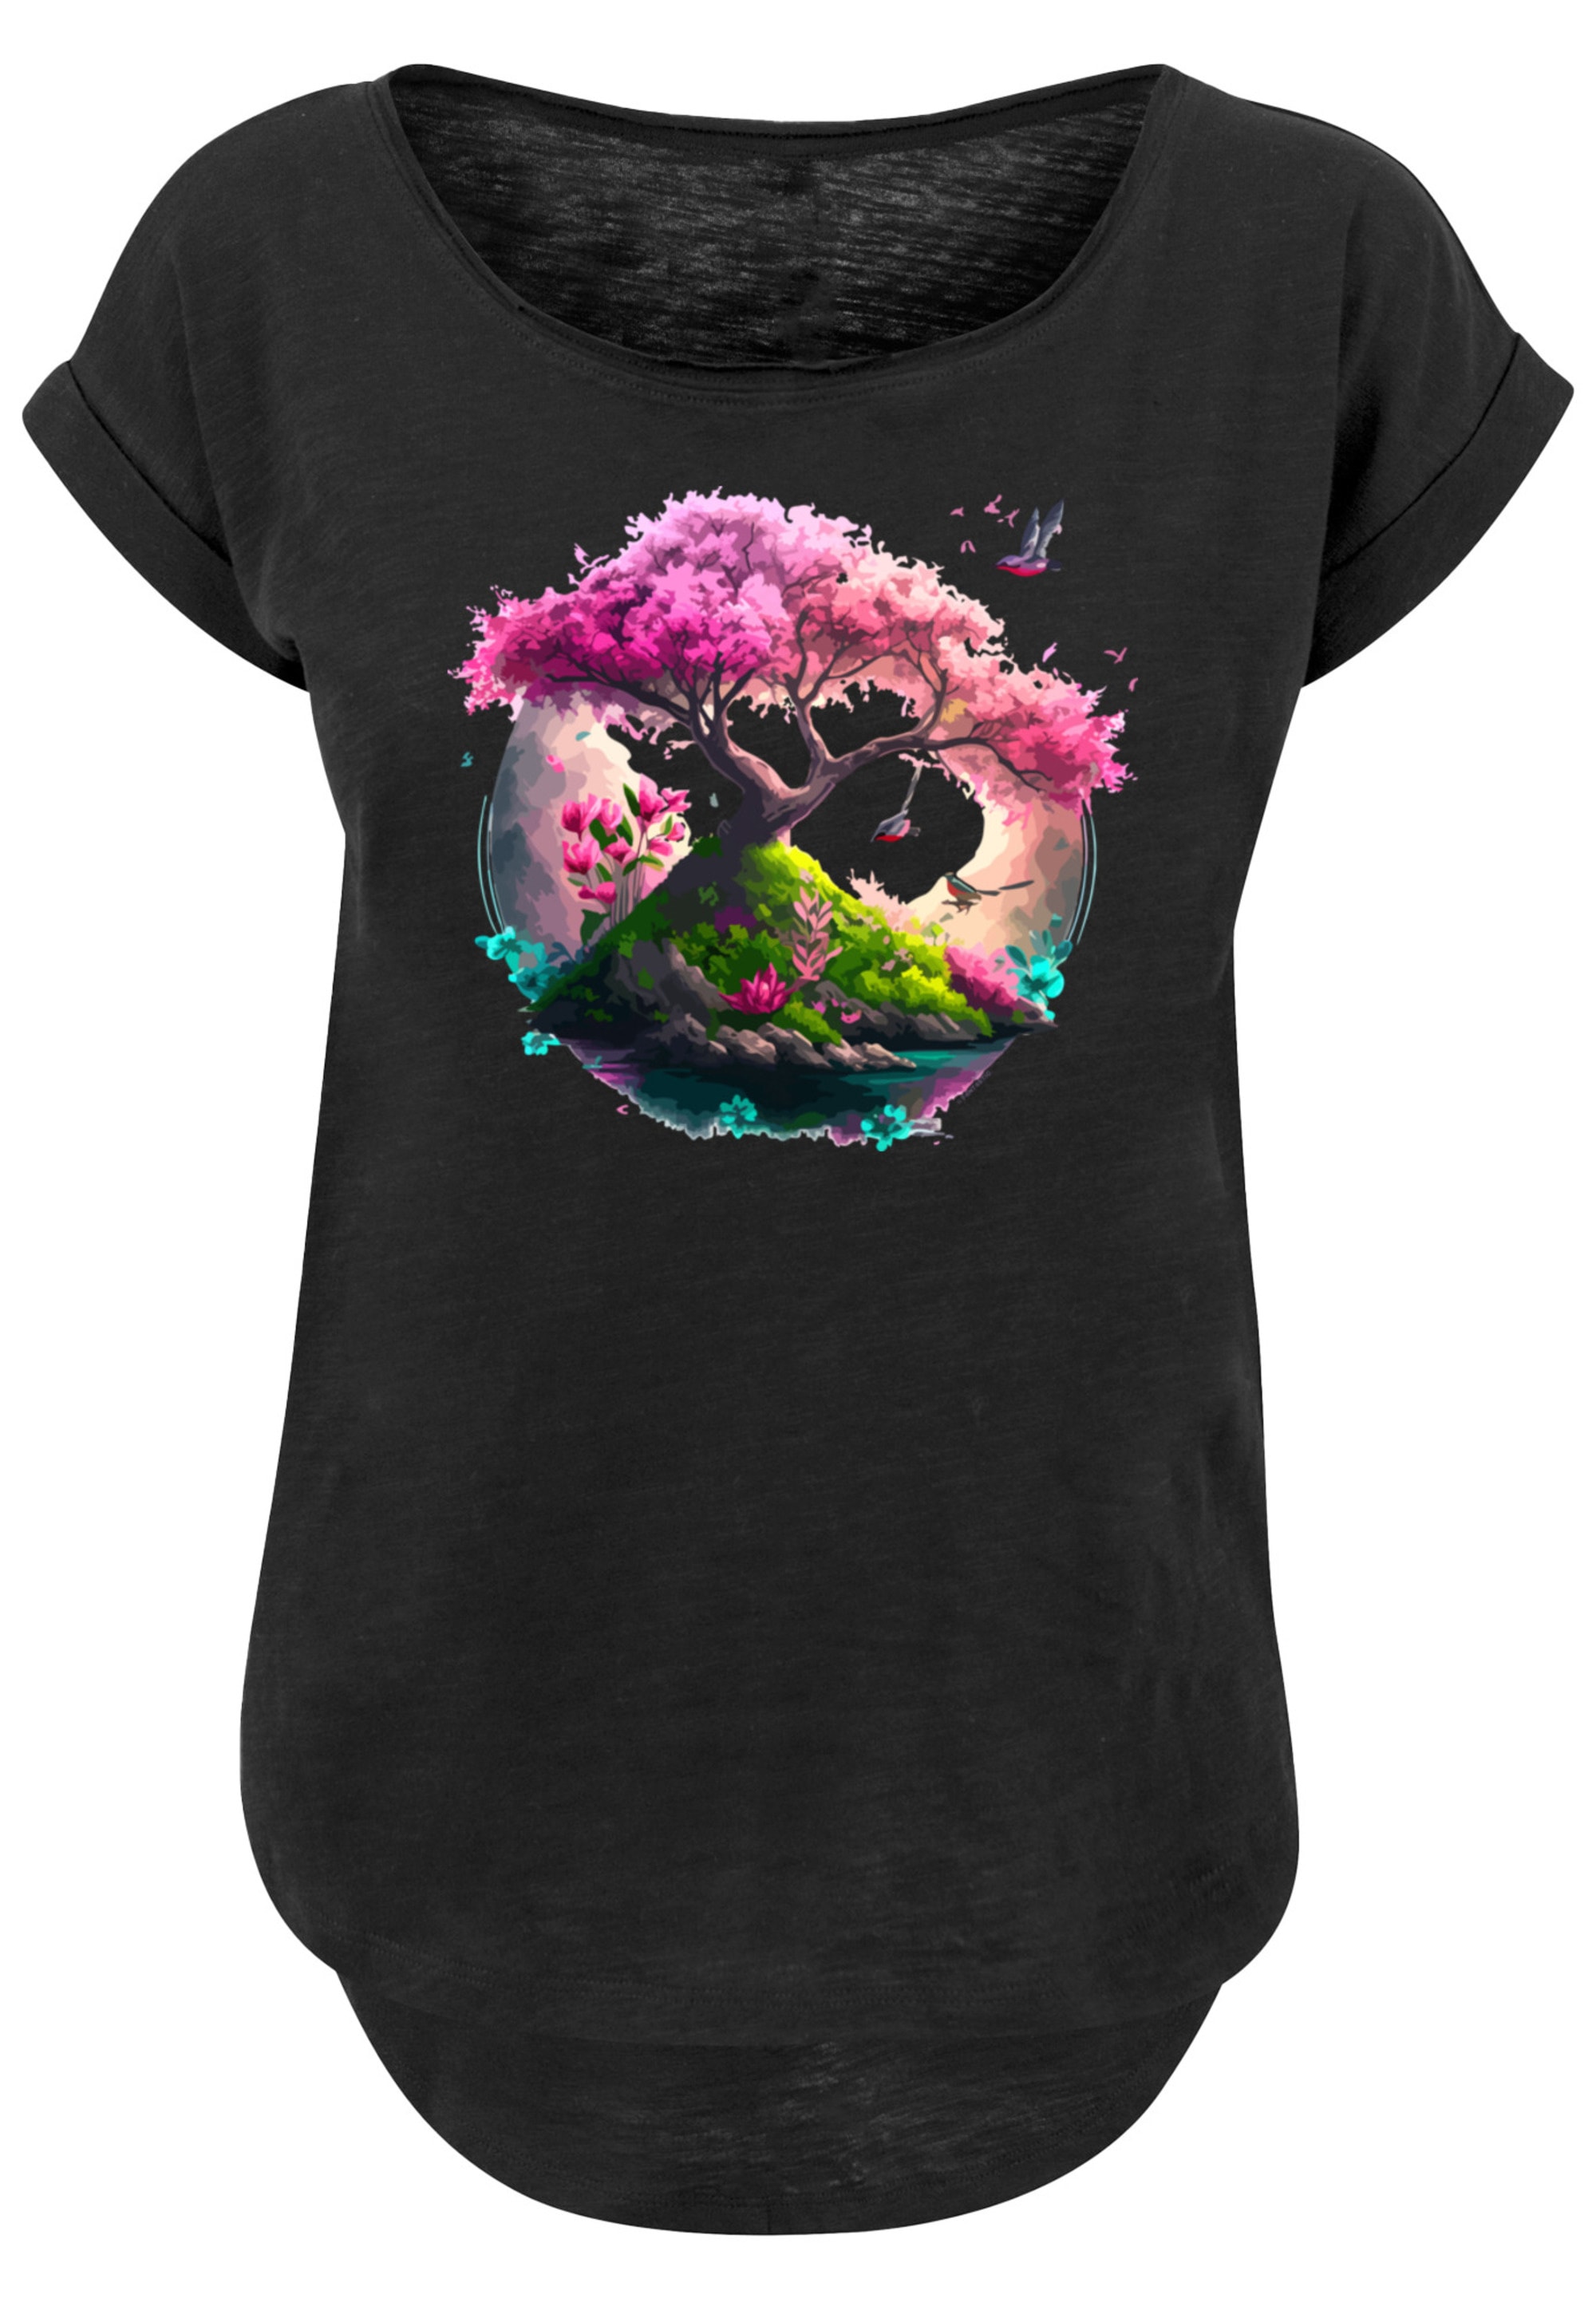 F4NT4STIC T-Shirt »Kirschblüten Baum«, Print kaufen | I'm walking